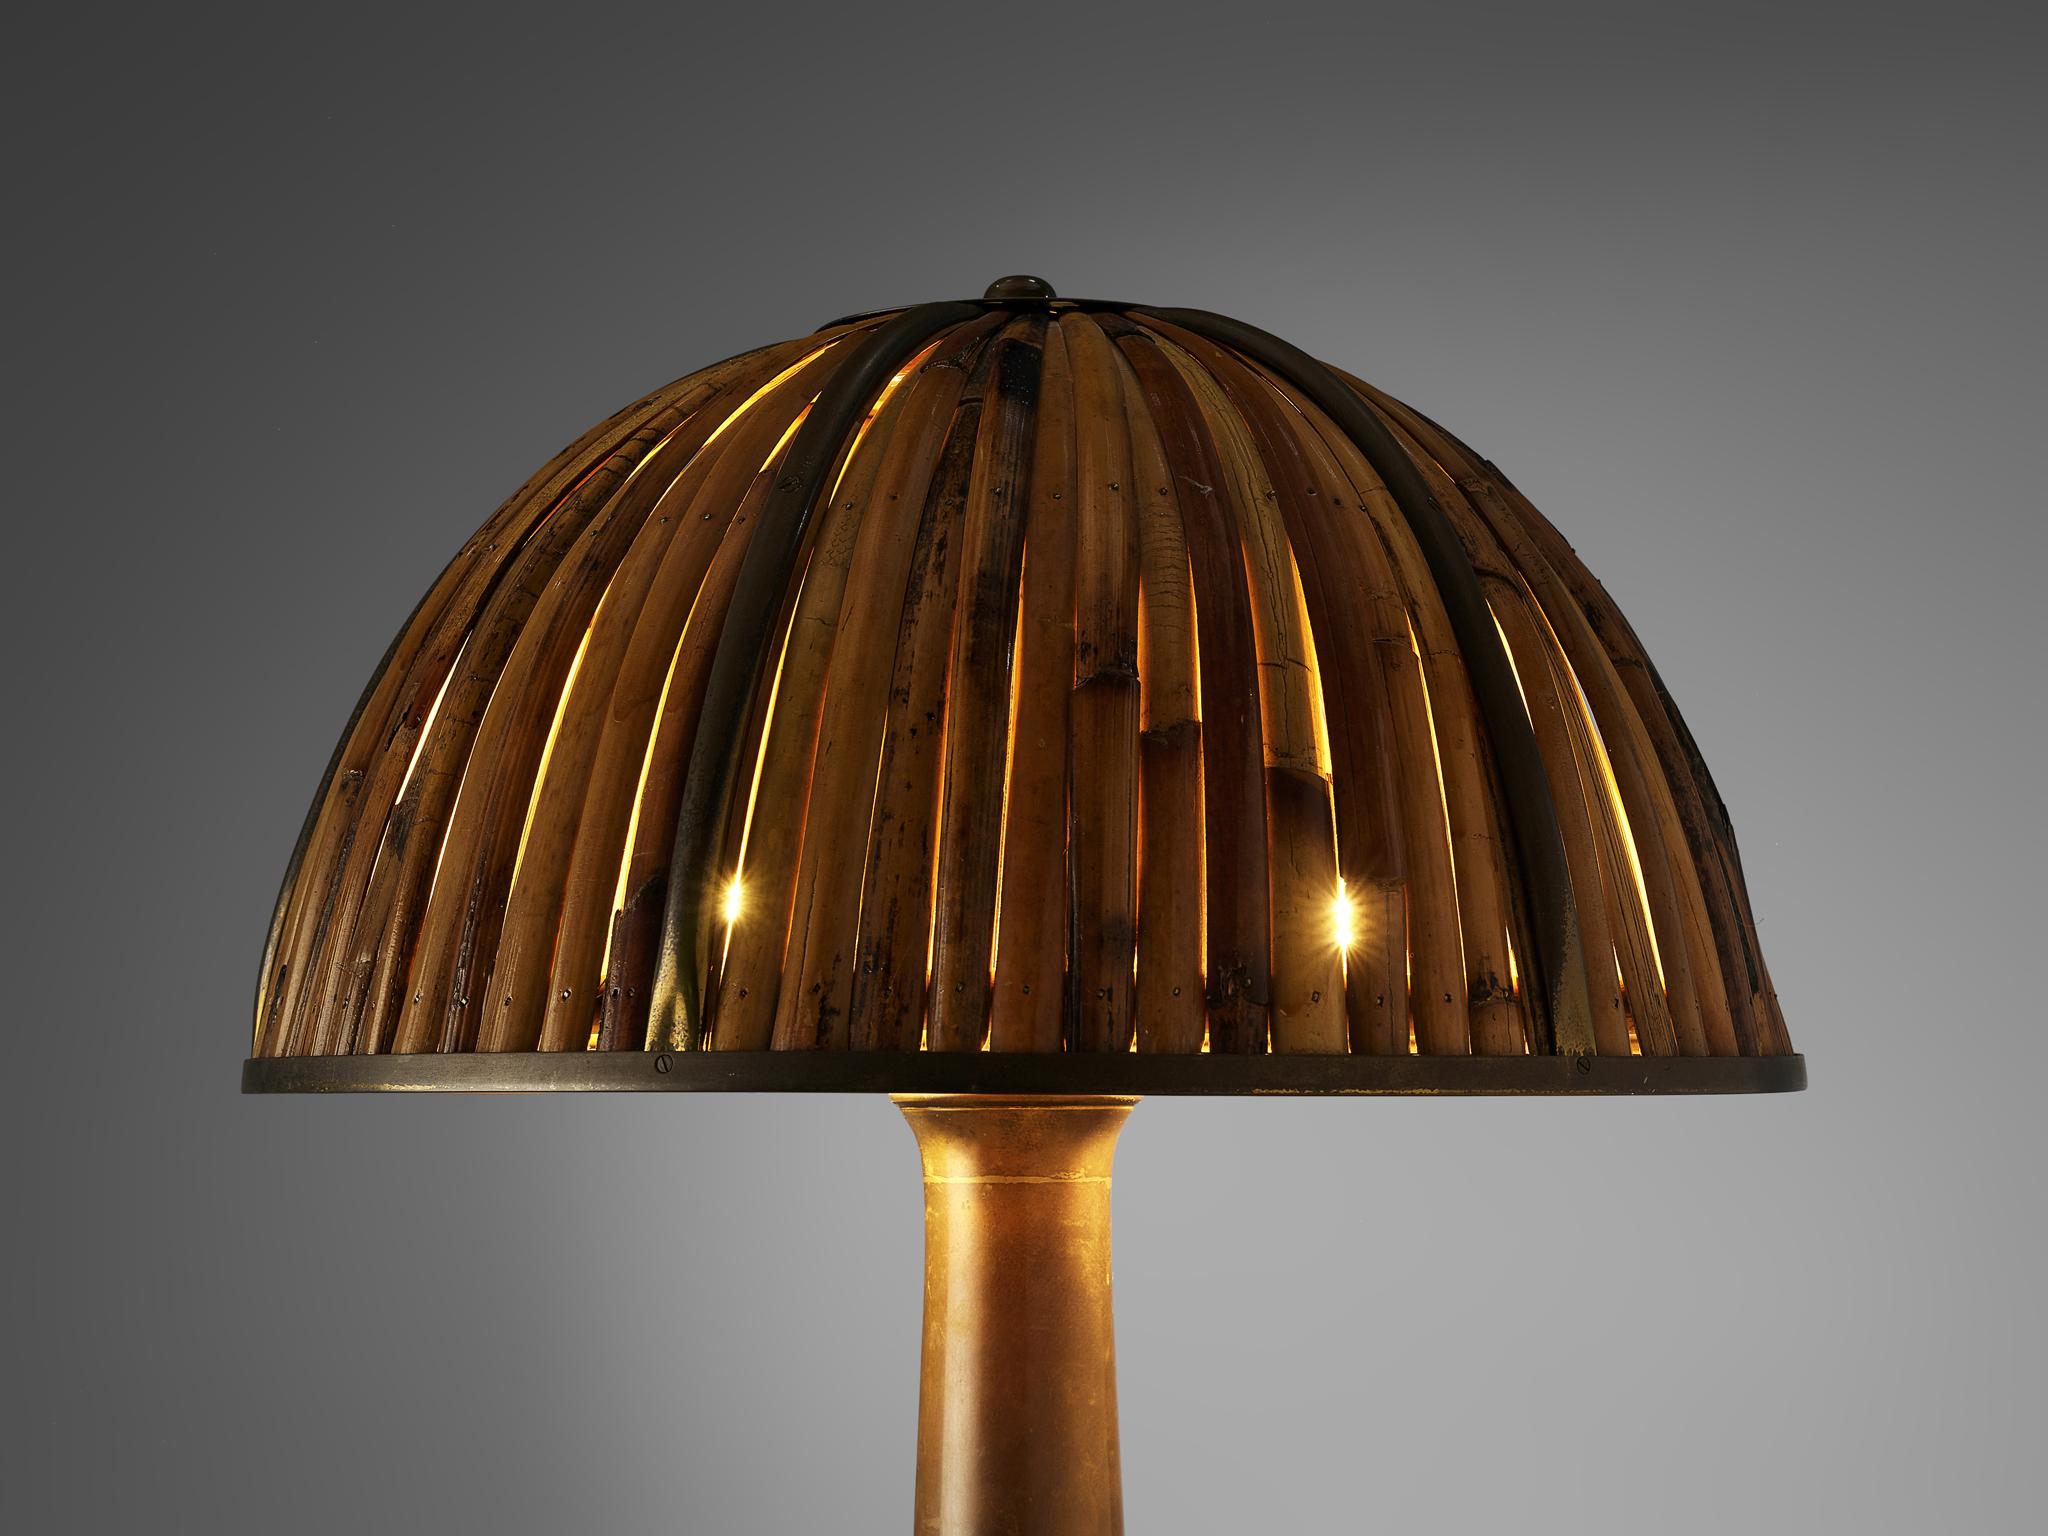 Italian Gabriella Crespi 'Fungo' Table Lamp in Brass and Bamboo